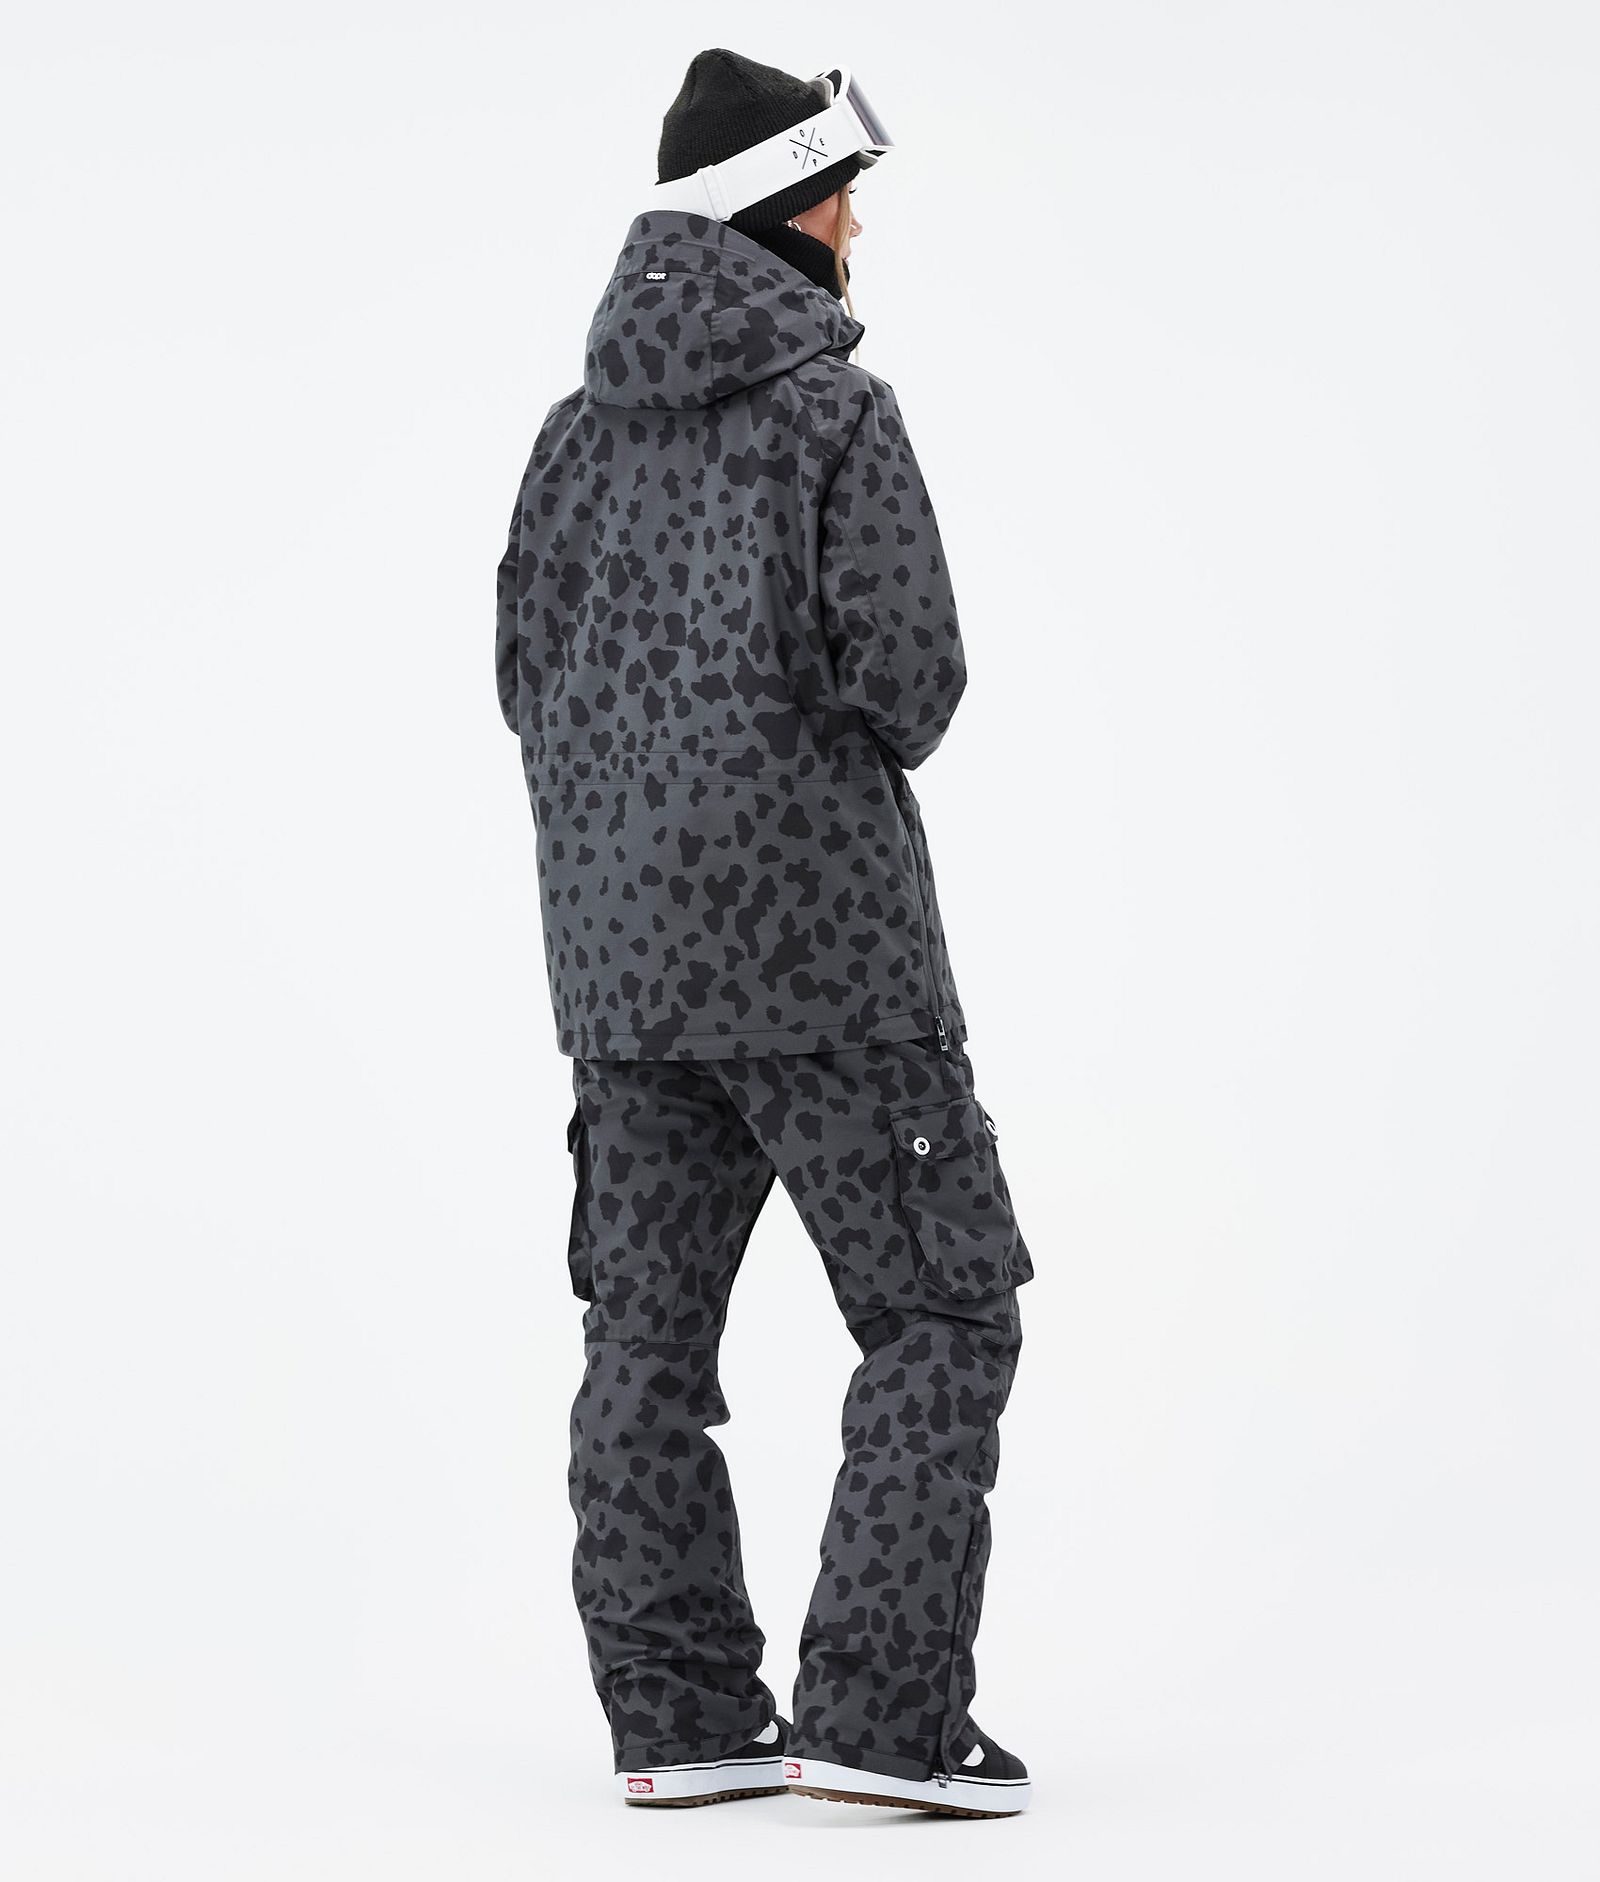 Annok W Outfit Snowboard Femme Dots Phantom